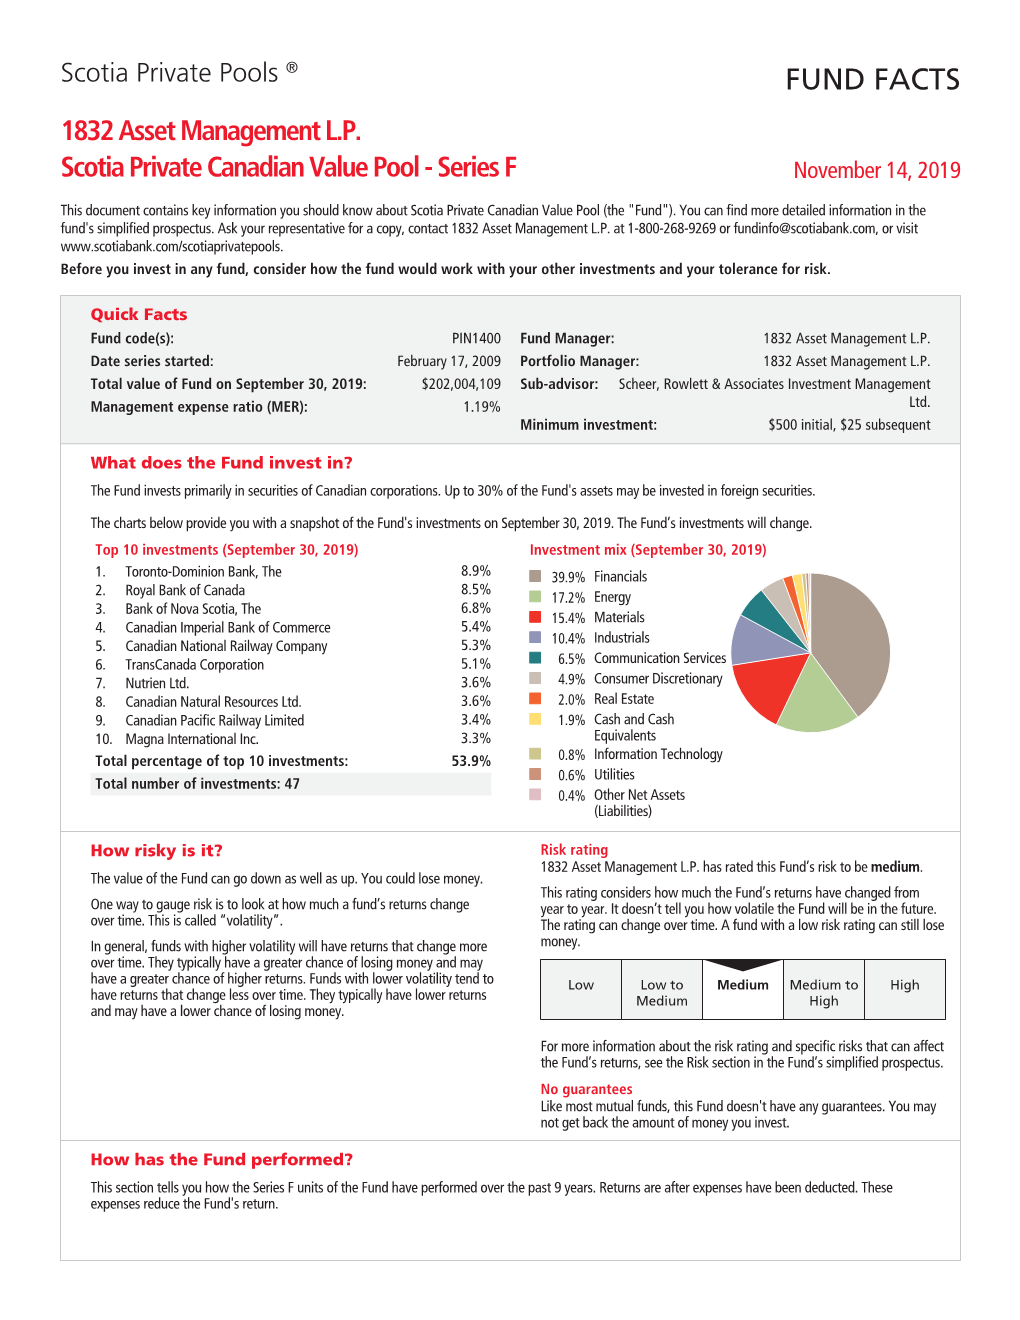 Scotia Private Canadian Value Pool - Series F November 14, 2019